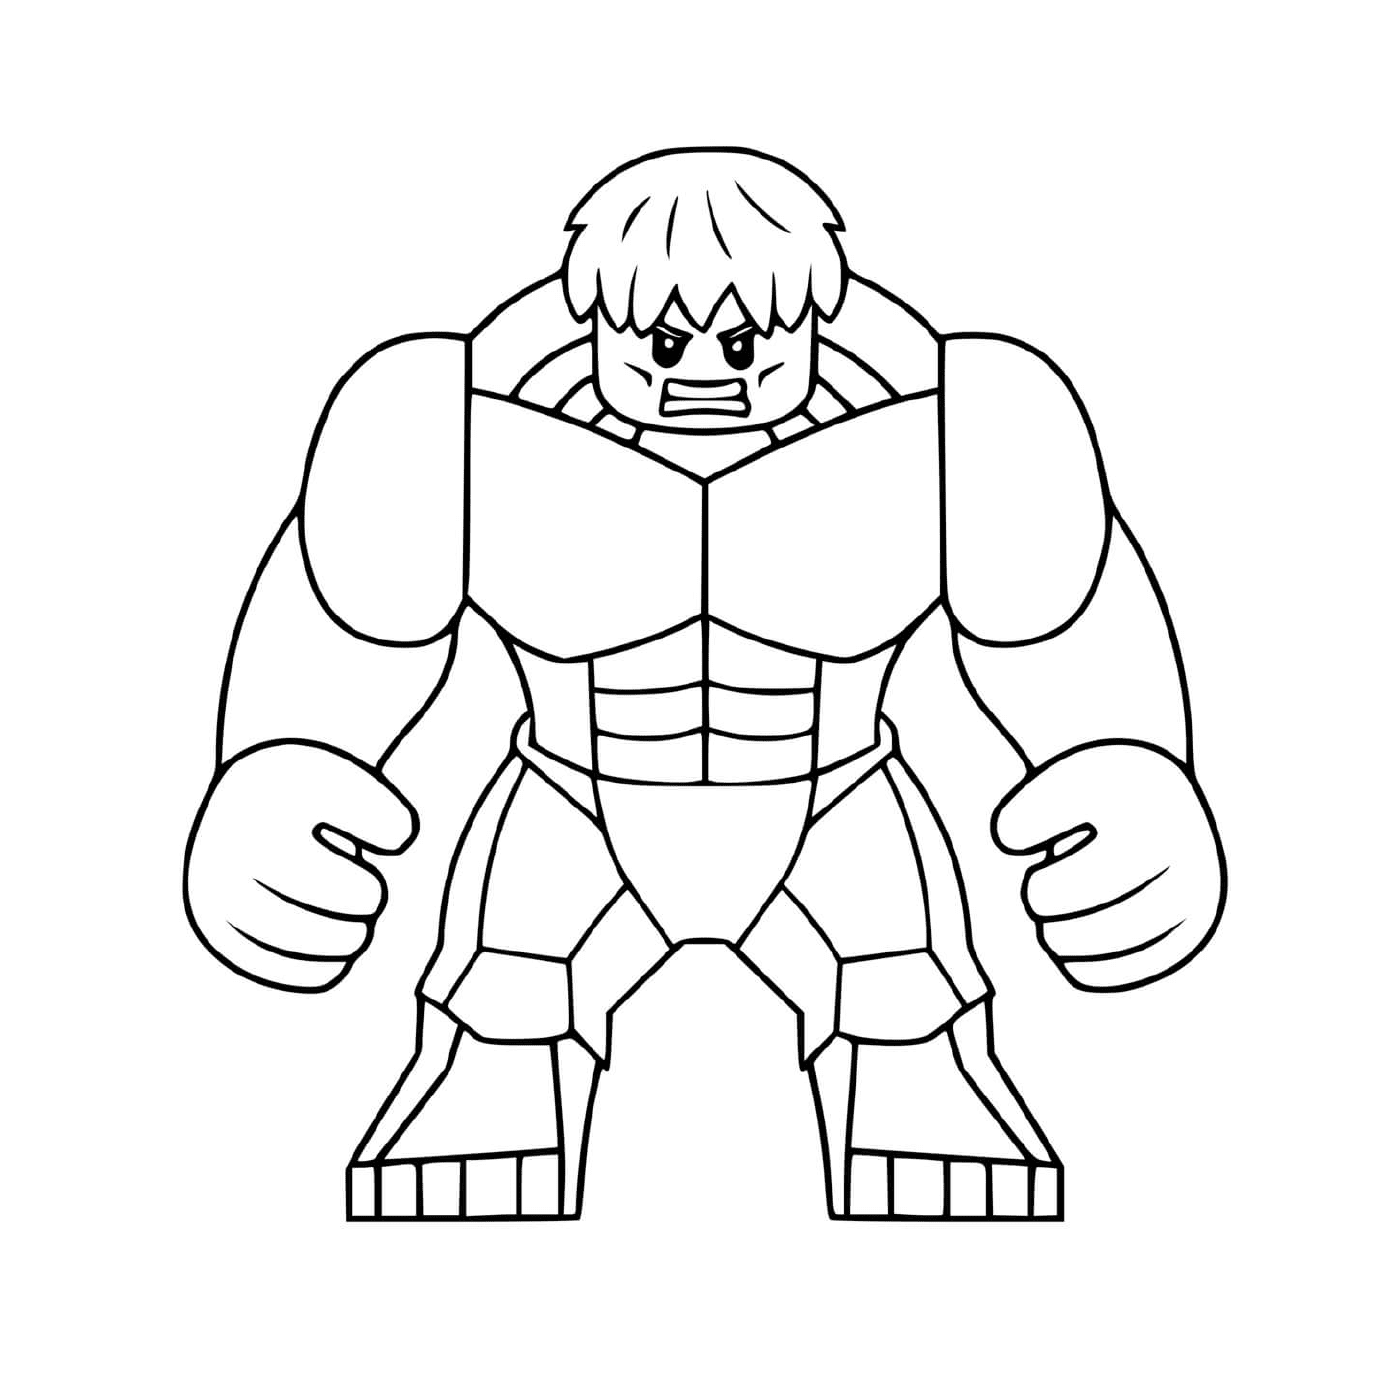  Character of Lego Hulk 